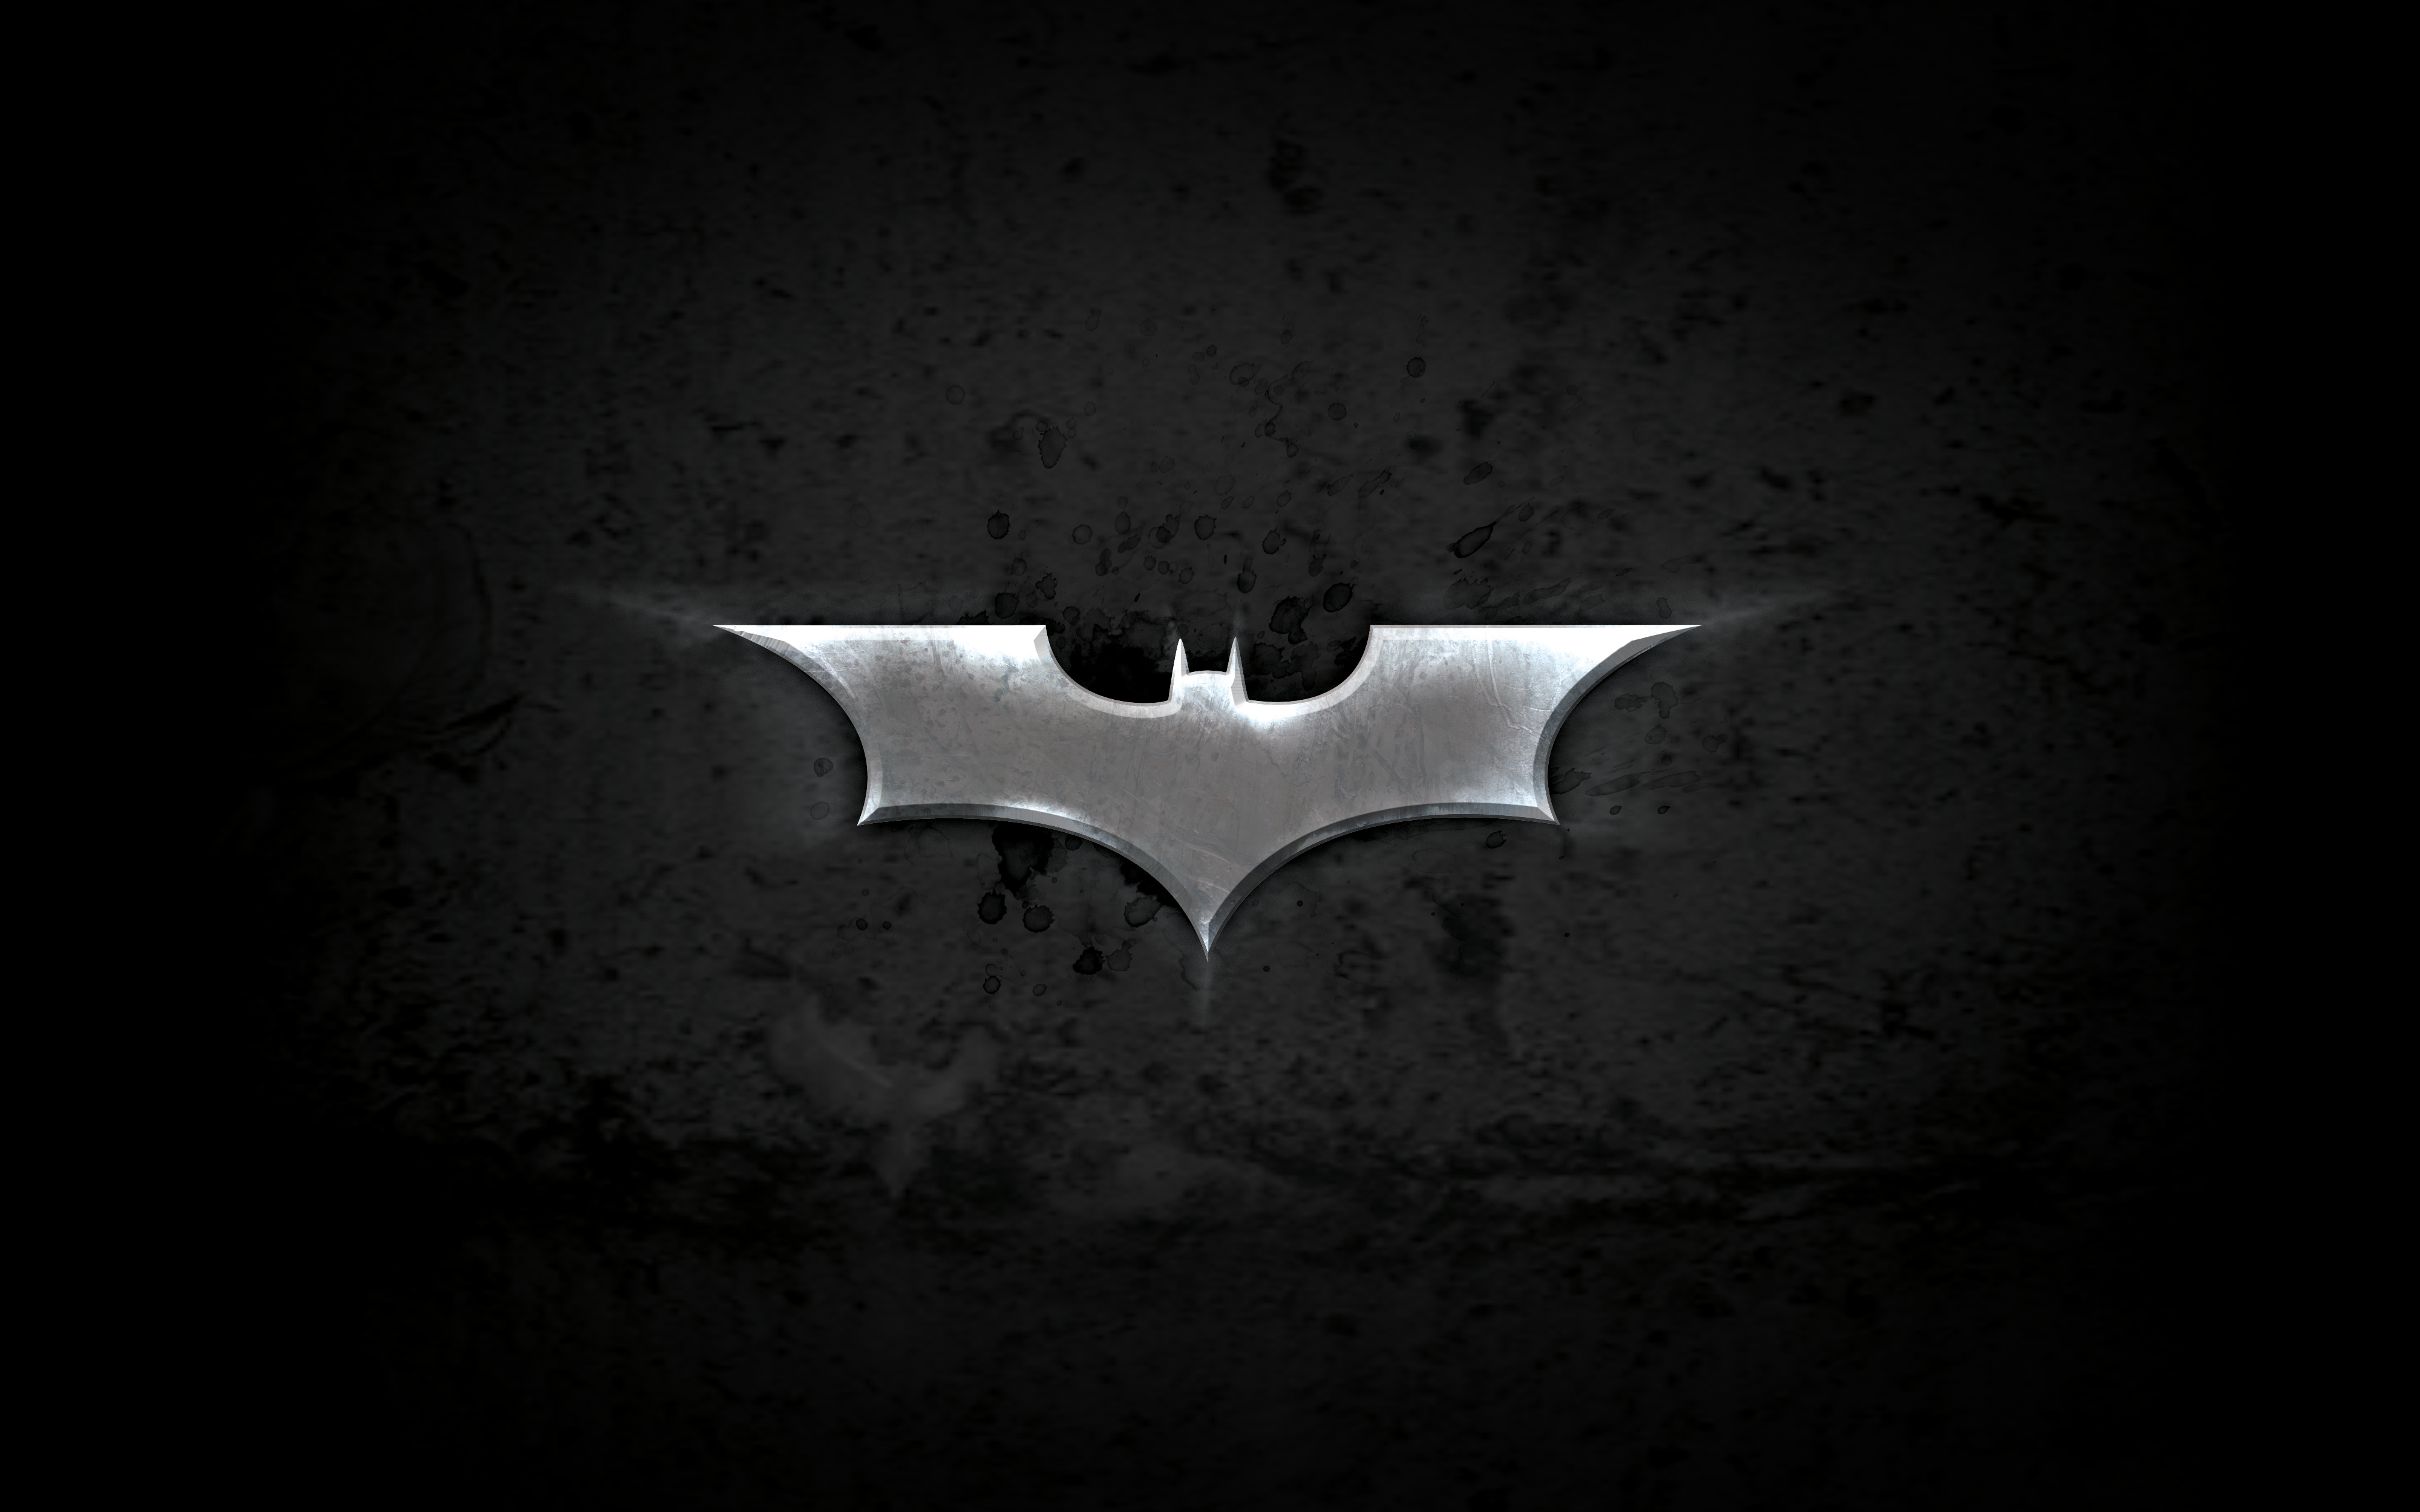 Batman Wallpaper for Desktop 5162 - HD Wallpapers Site